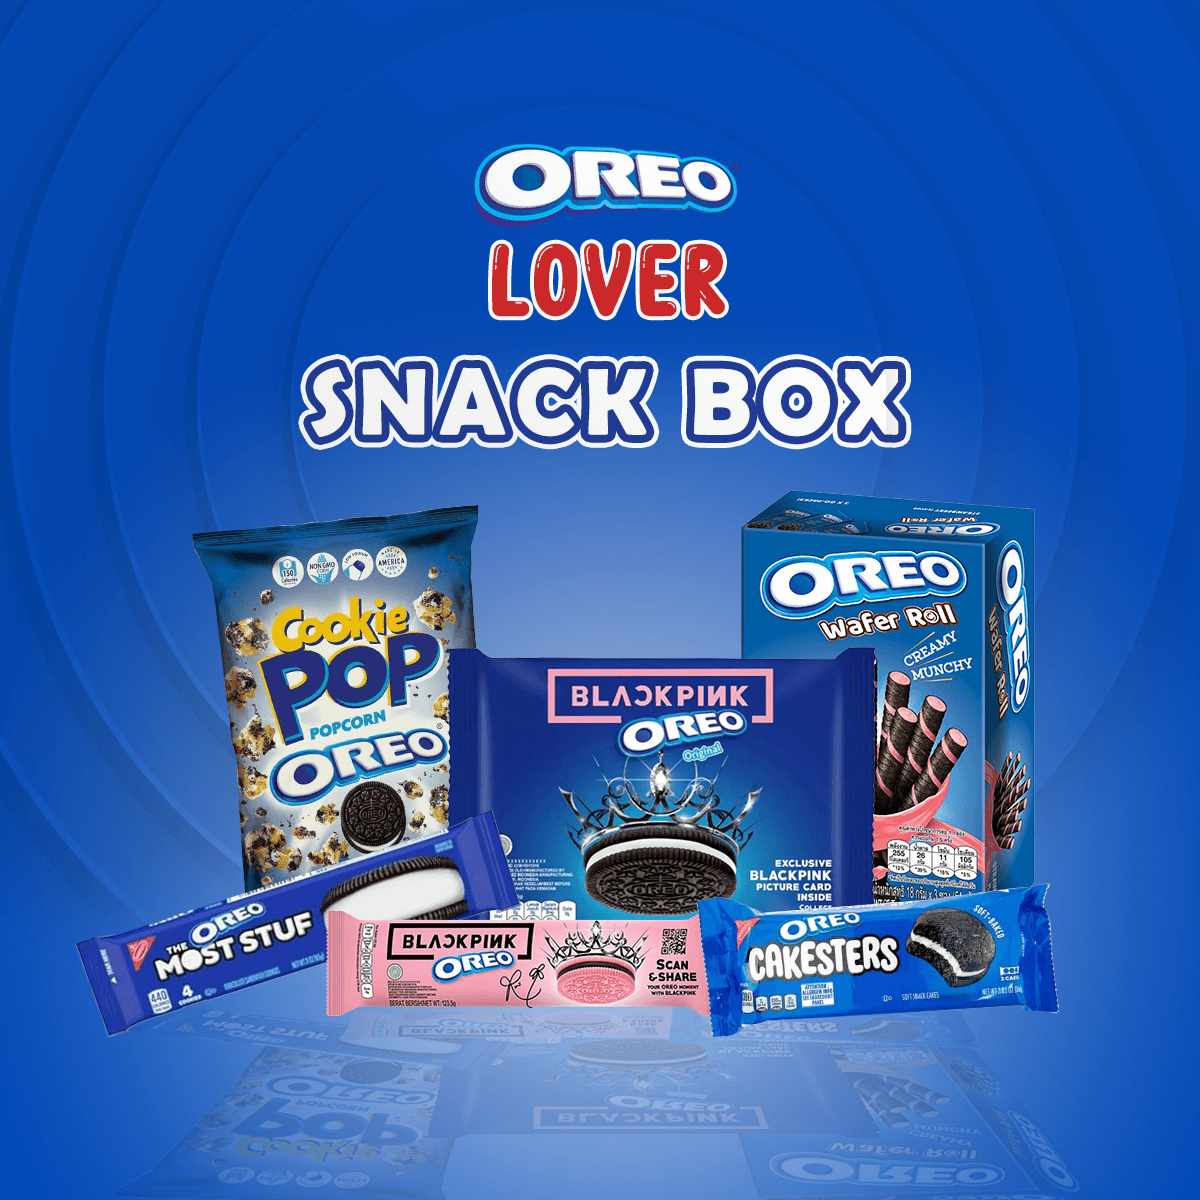 Oreo Lover Snack Box